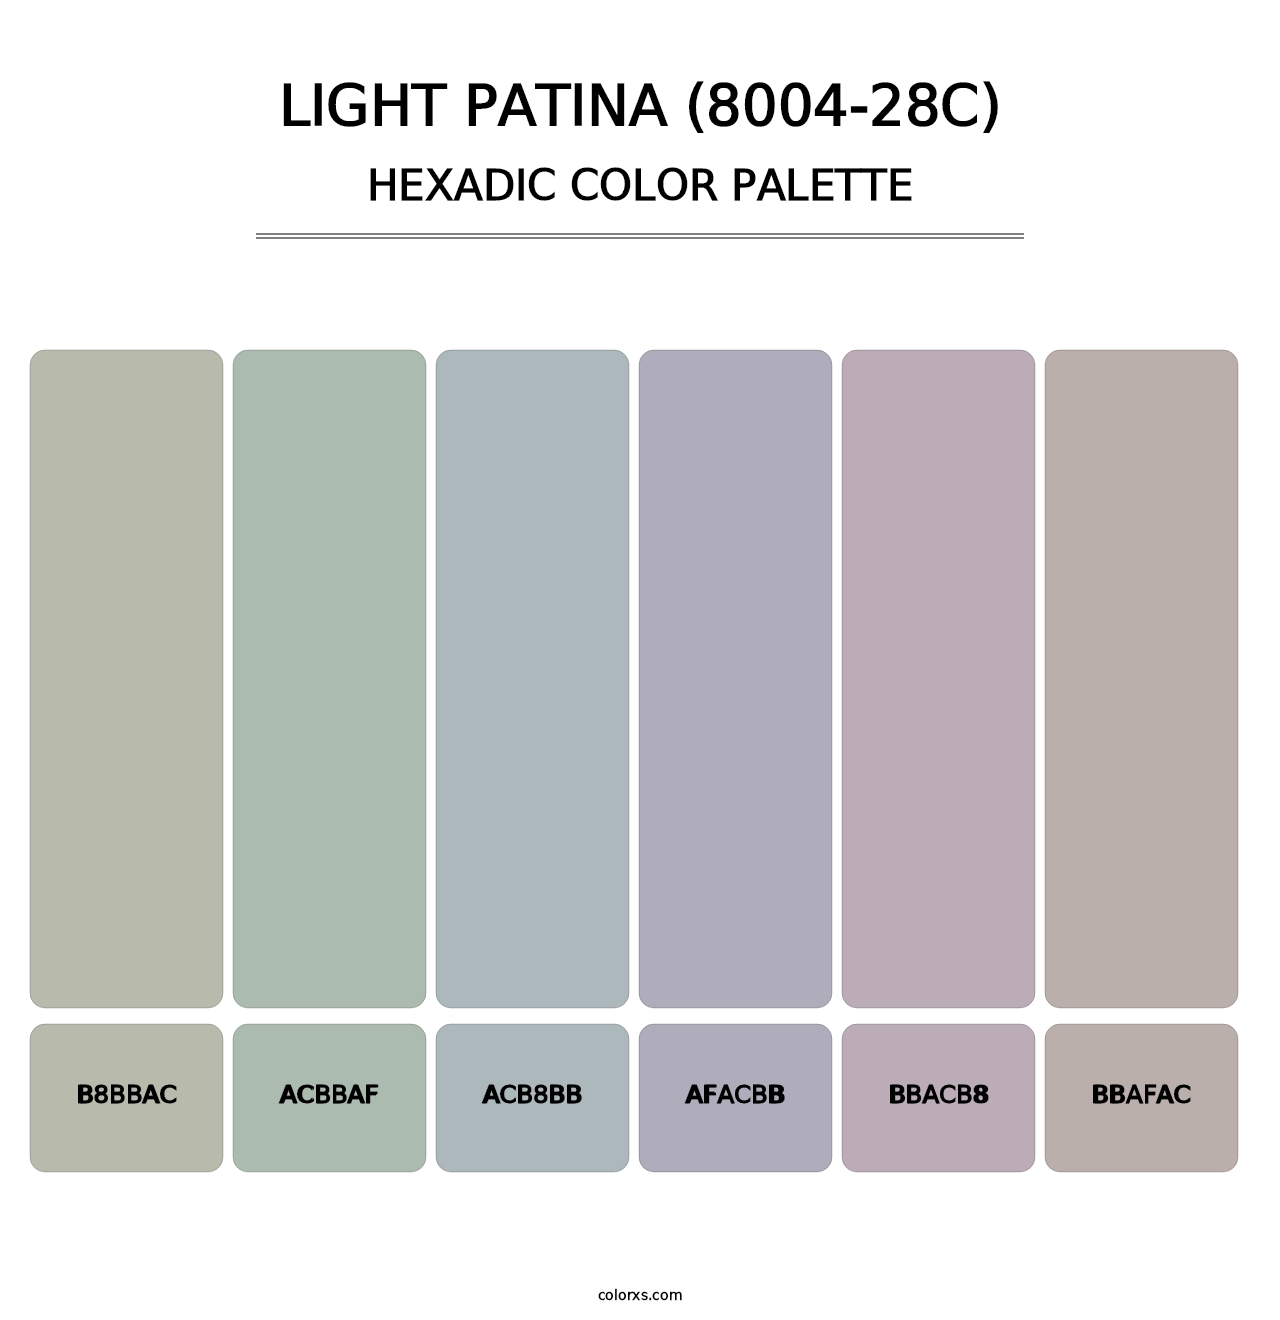 Light Patina (8004-28C) - Hexadic Color Palette